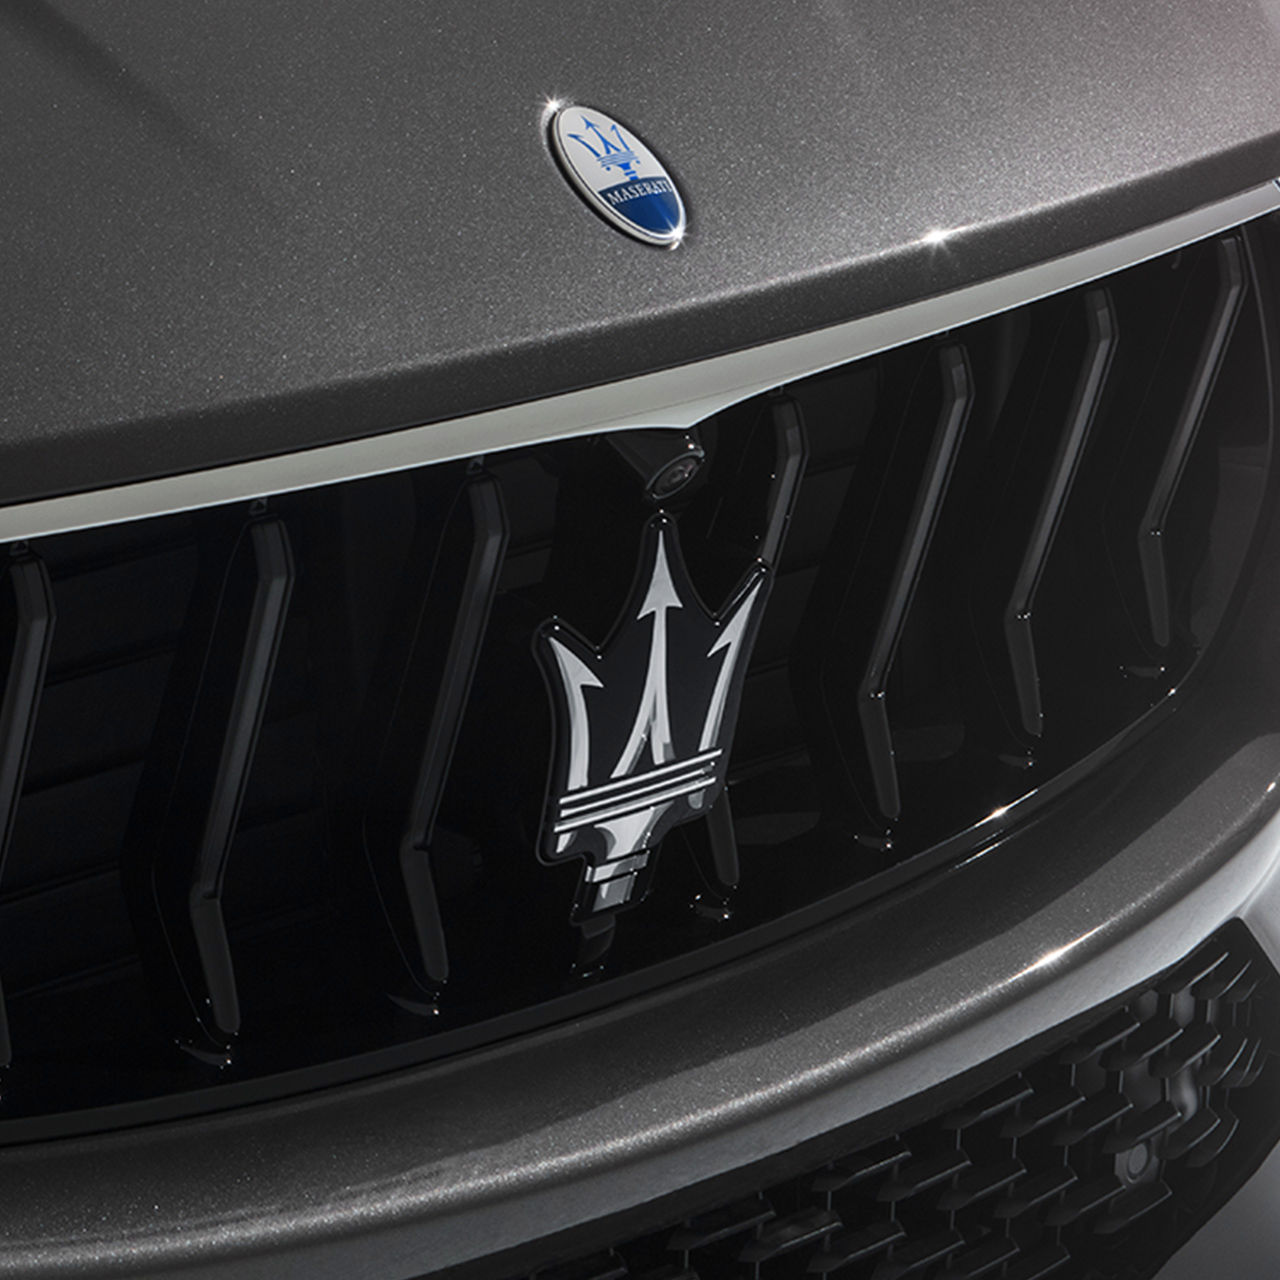 Bumper with Maserati logo detail